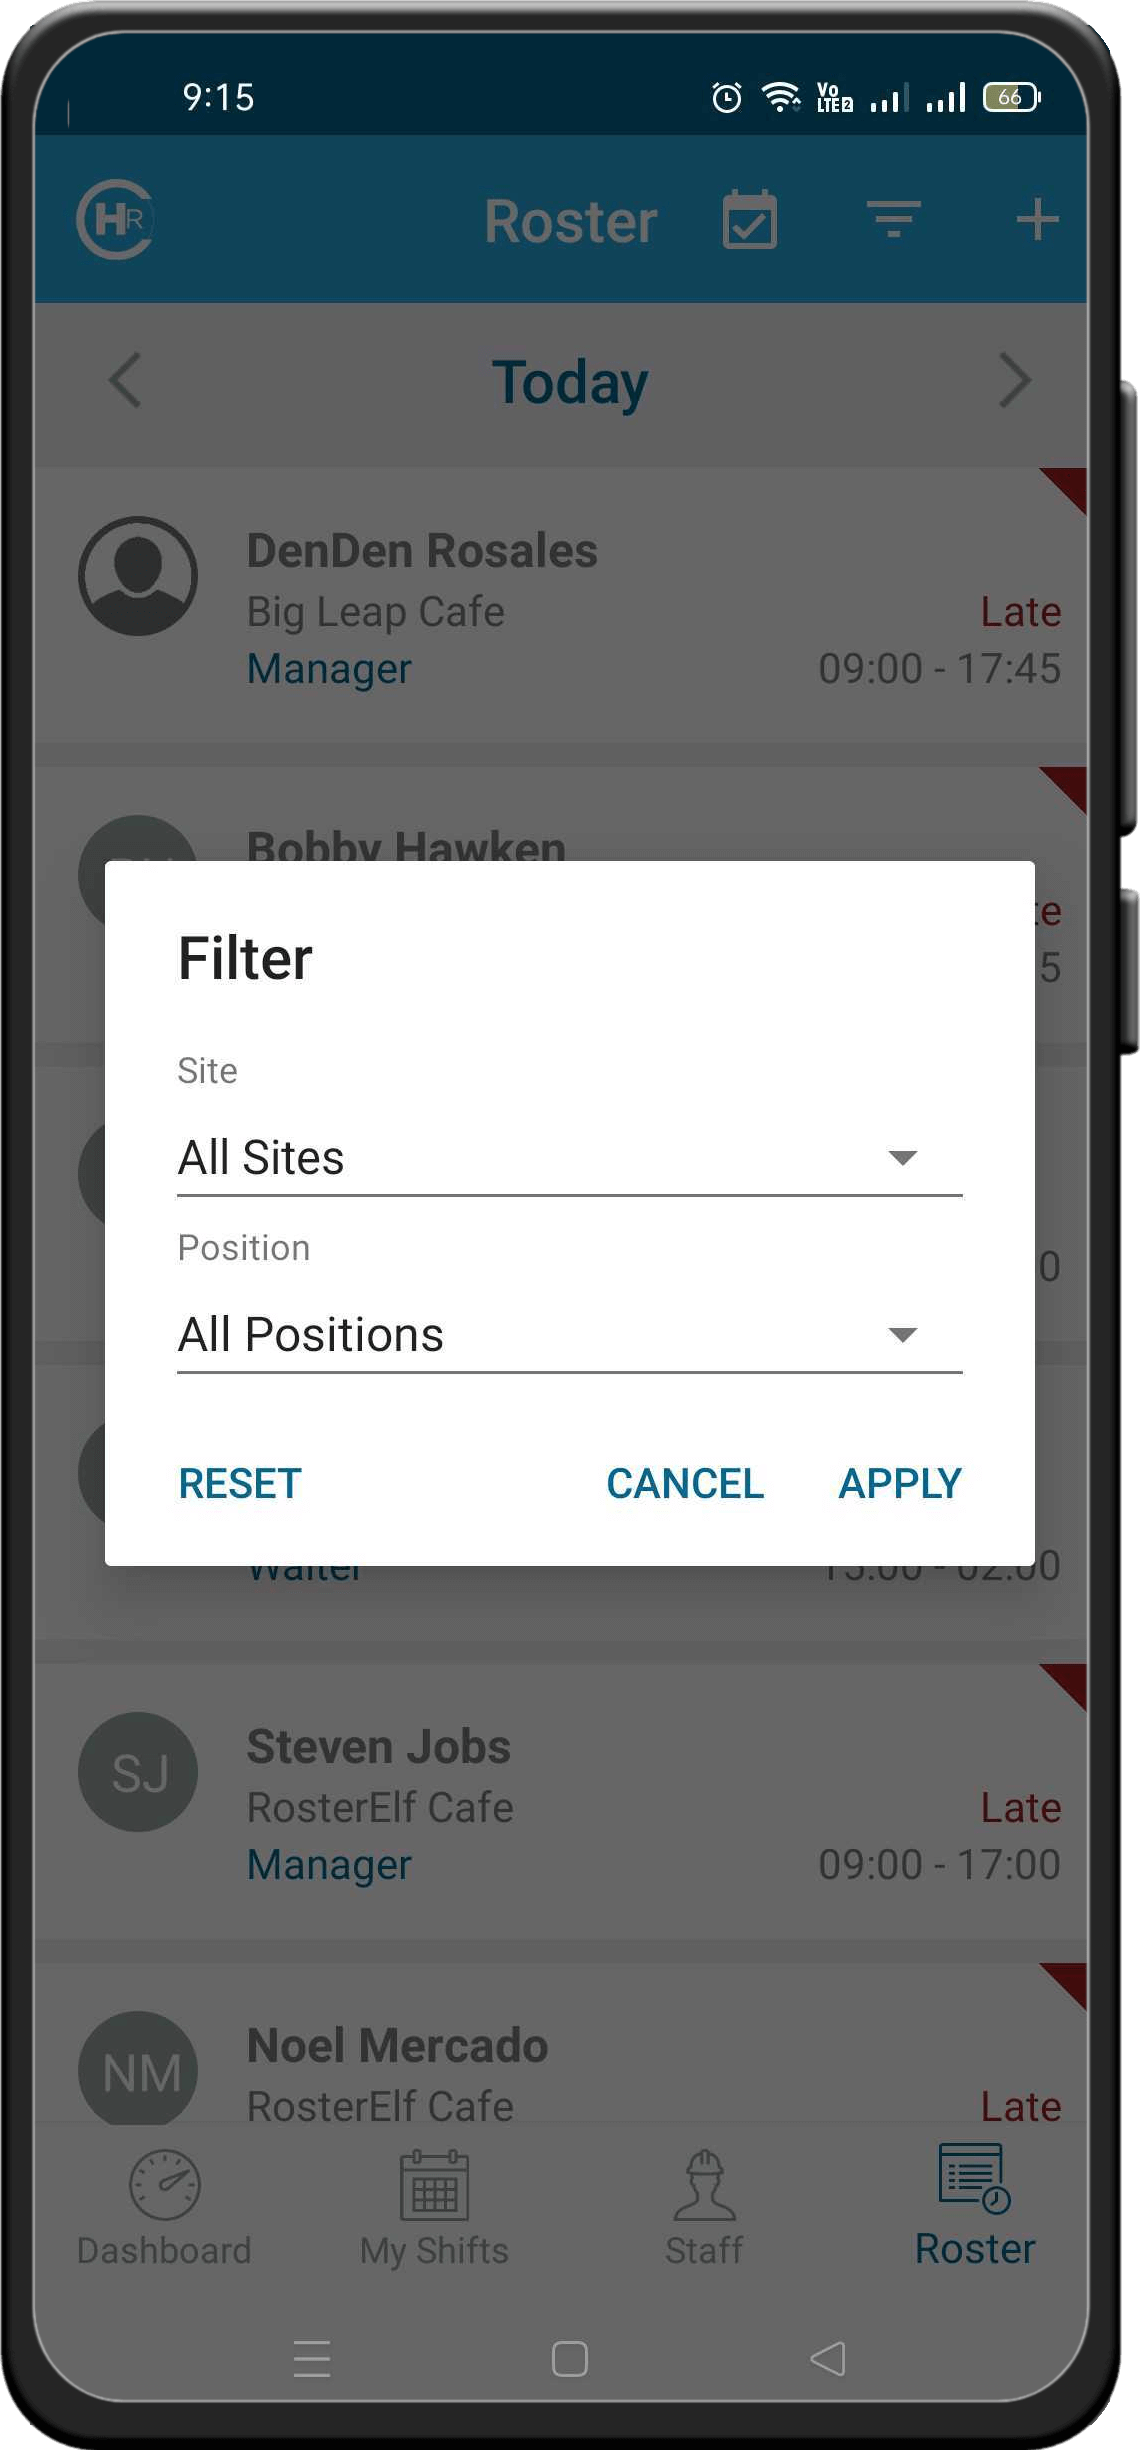 FilterSites.png